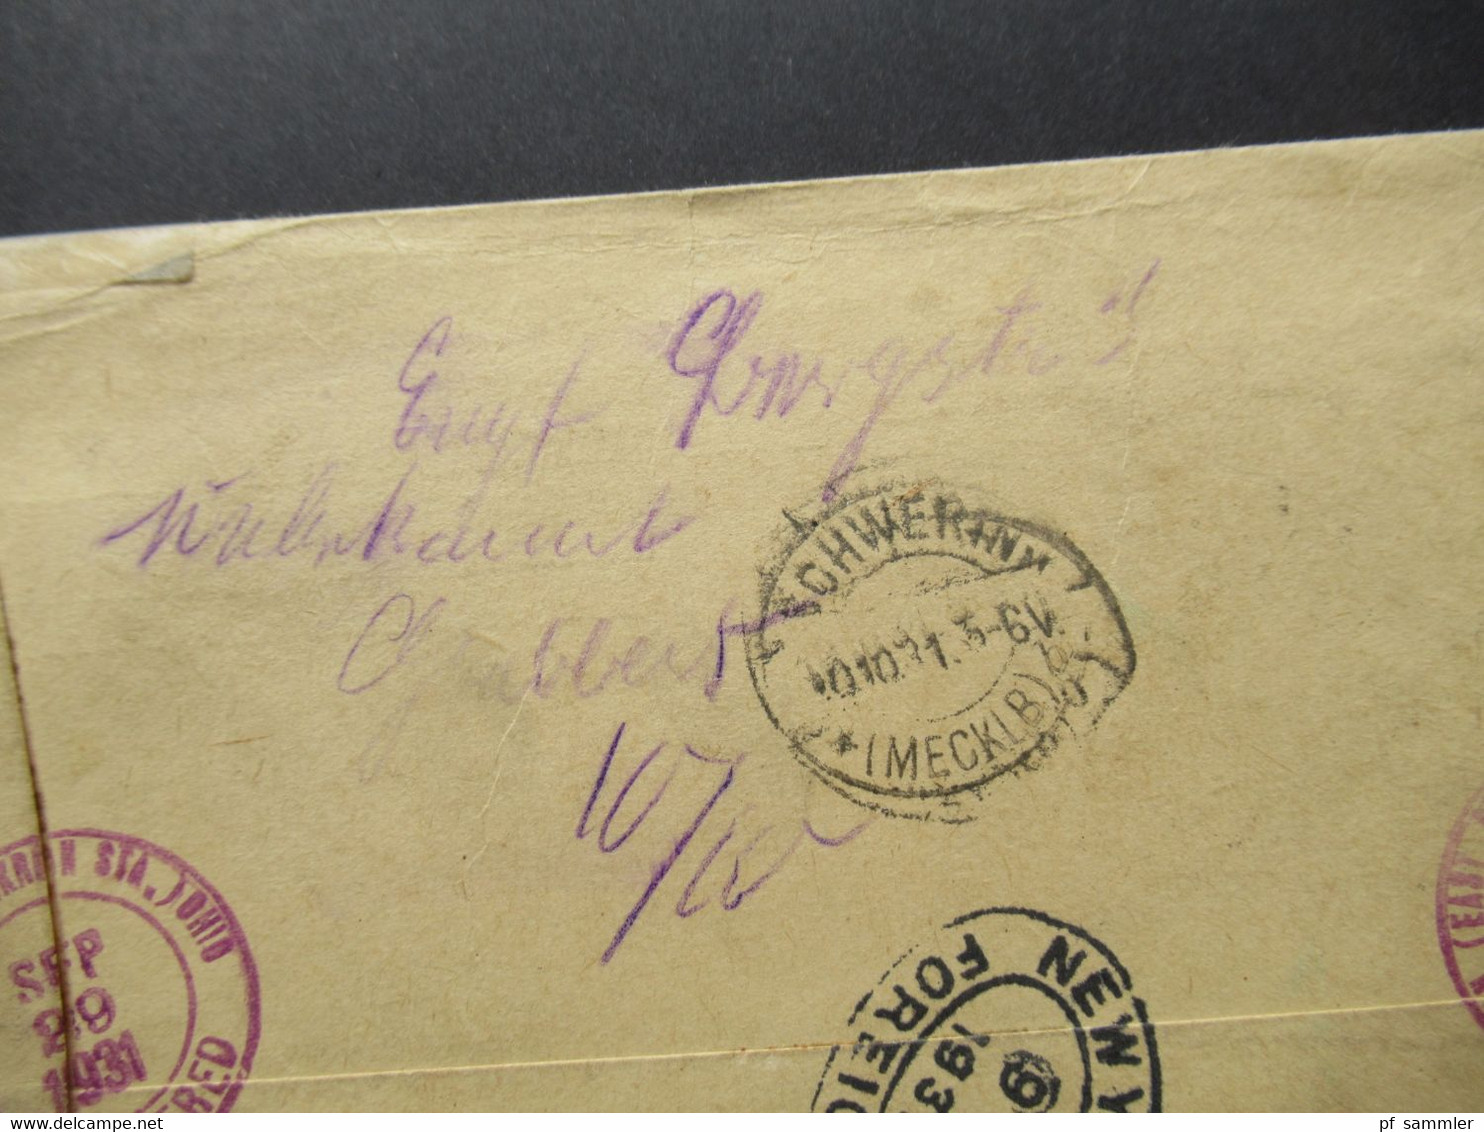 USA 1931 Registered letter nach Schwerin mit Aufkleber Customs (Douane) May be officially opened mit vielen Stempeln